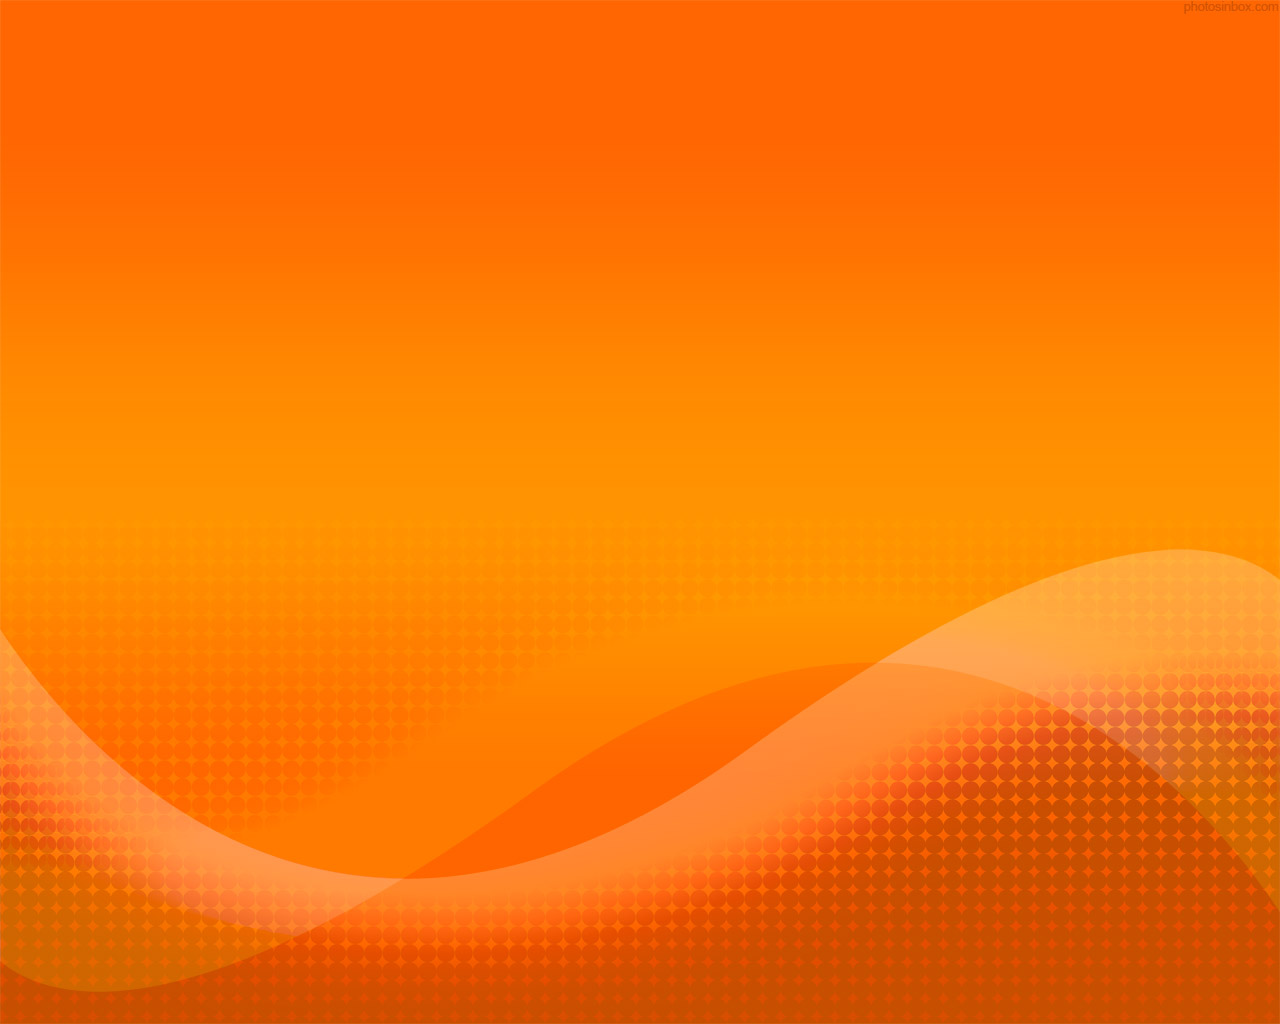 Orange Background Design Related Keywords Amp Suggestions